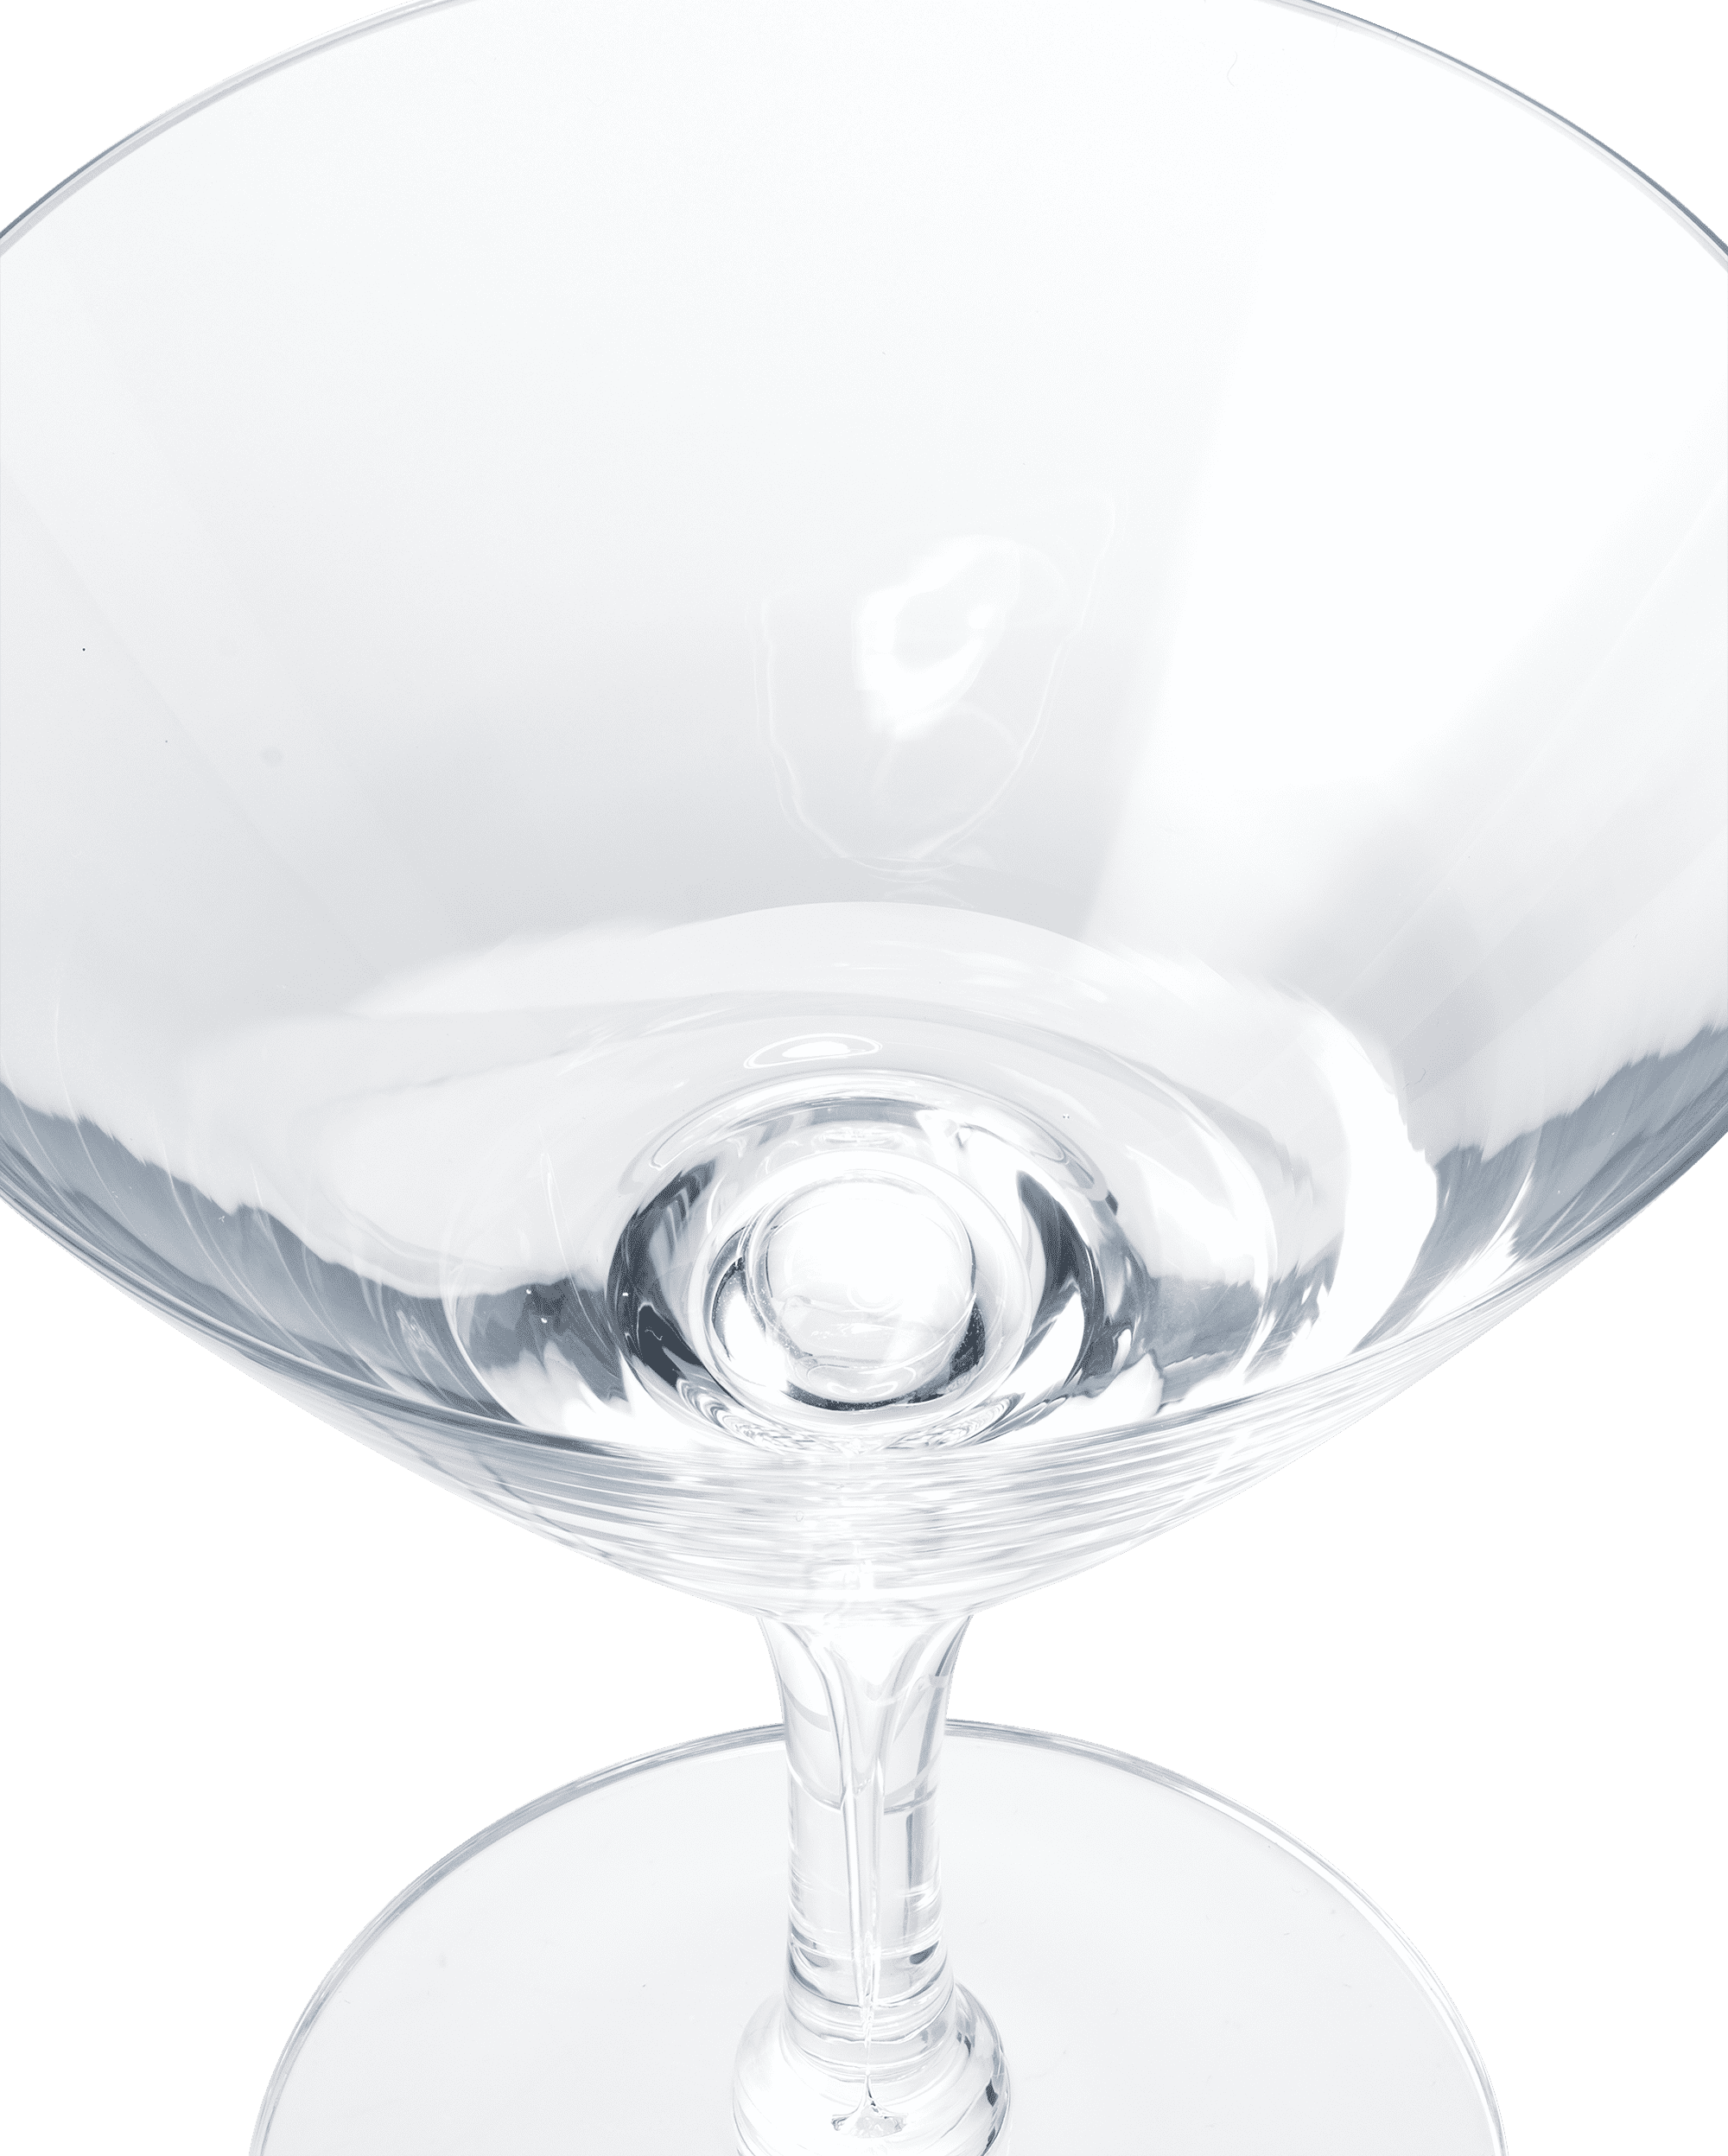 Cocktailglass 25 cl